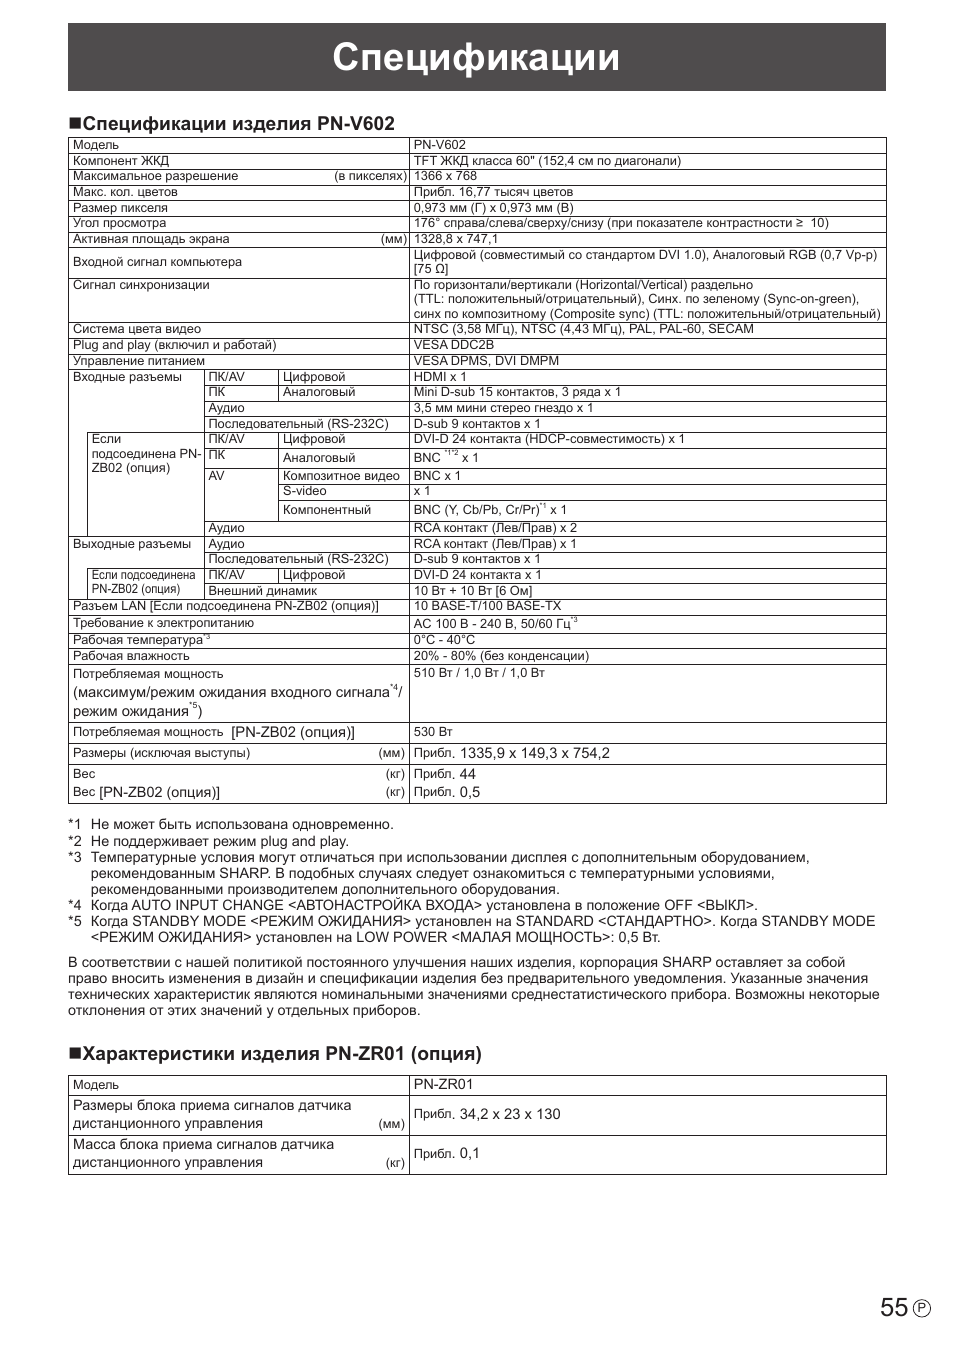 Спецификации, Русский, Nспецификации изделия pn-v602 | Nхарактеристики изделия pn-zr01 (опция) | Инструкция по эксплуатации Sharp PN-V602 | Страница 55 / 60